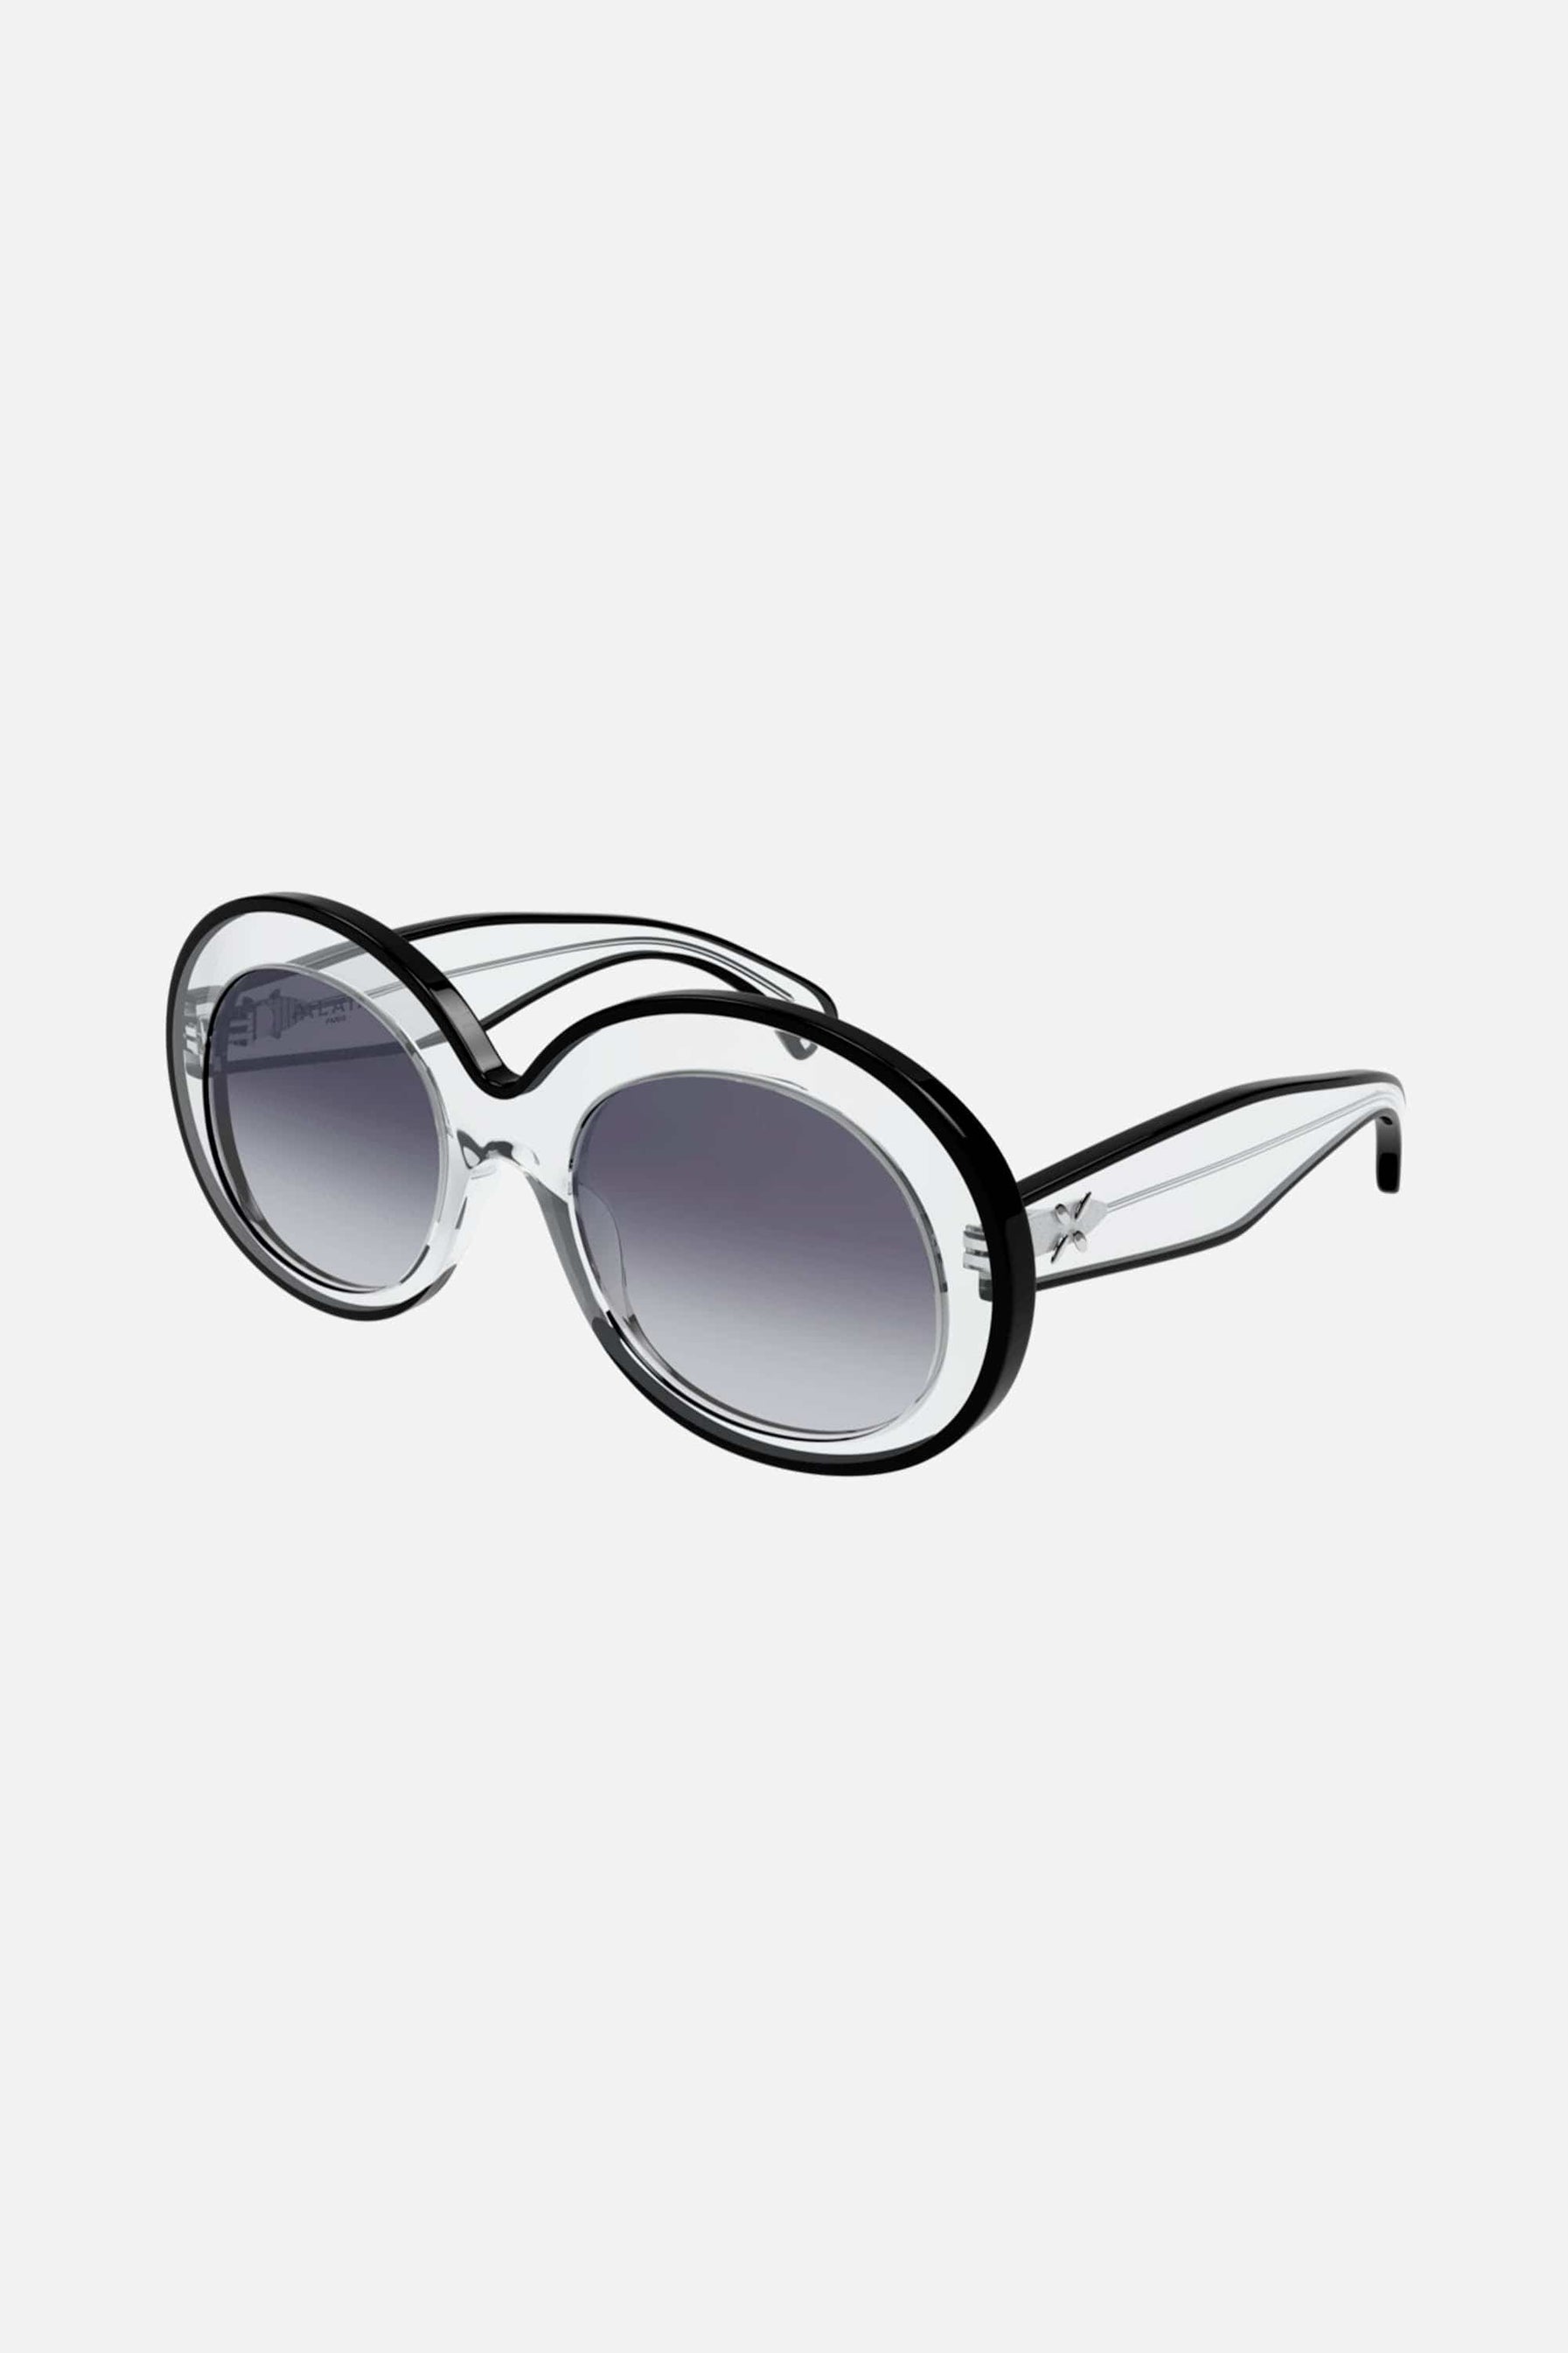 Alaia oval black and crystal sunglasses - Eyewear Club